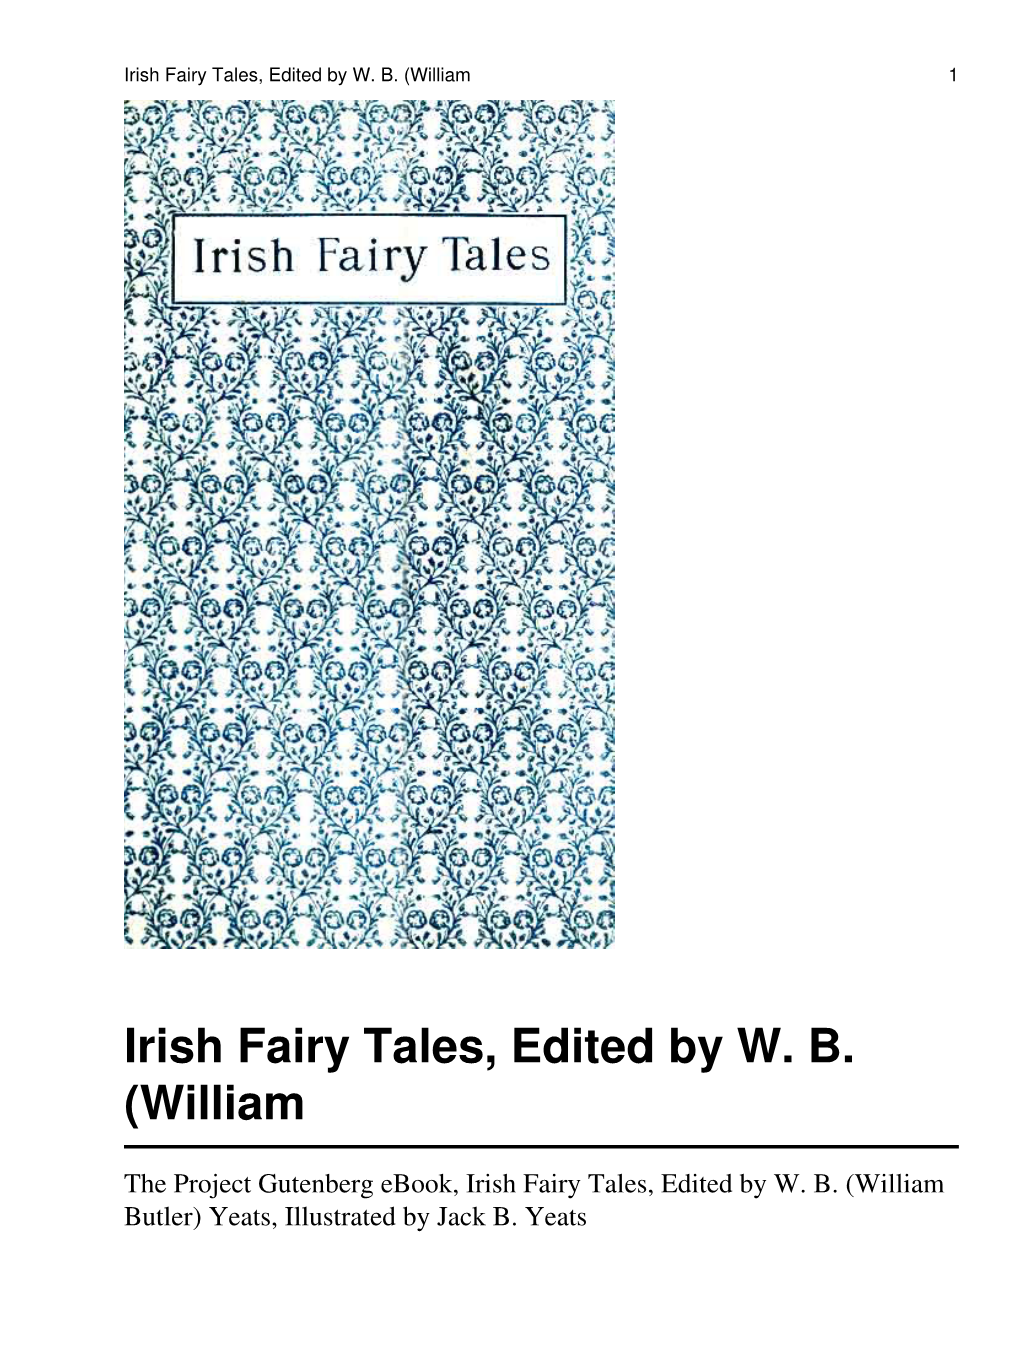 Irish Fairy Tales, Edited by WB (William